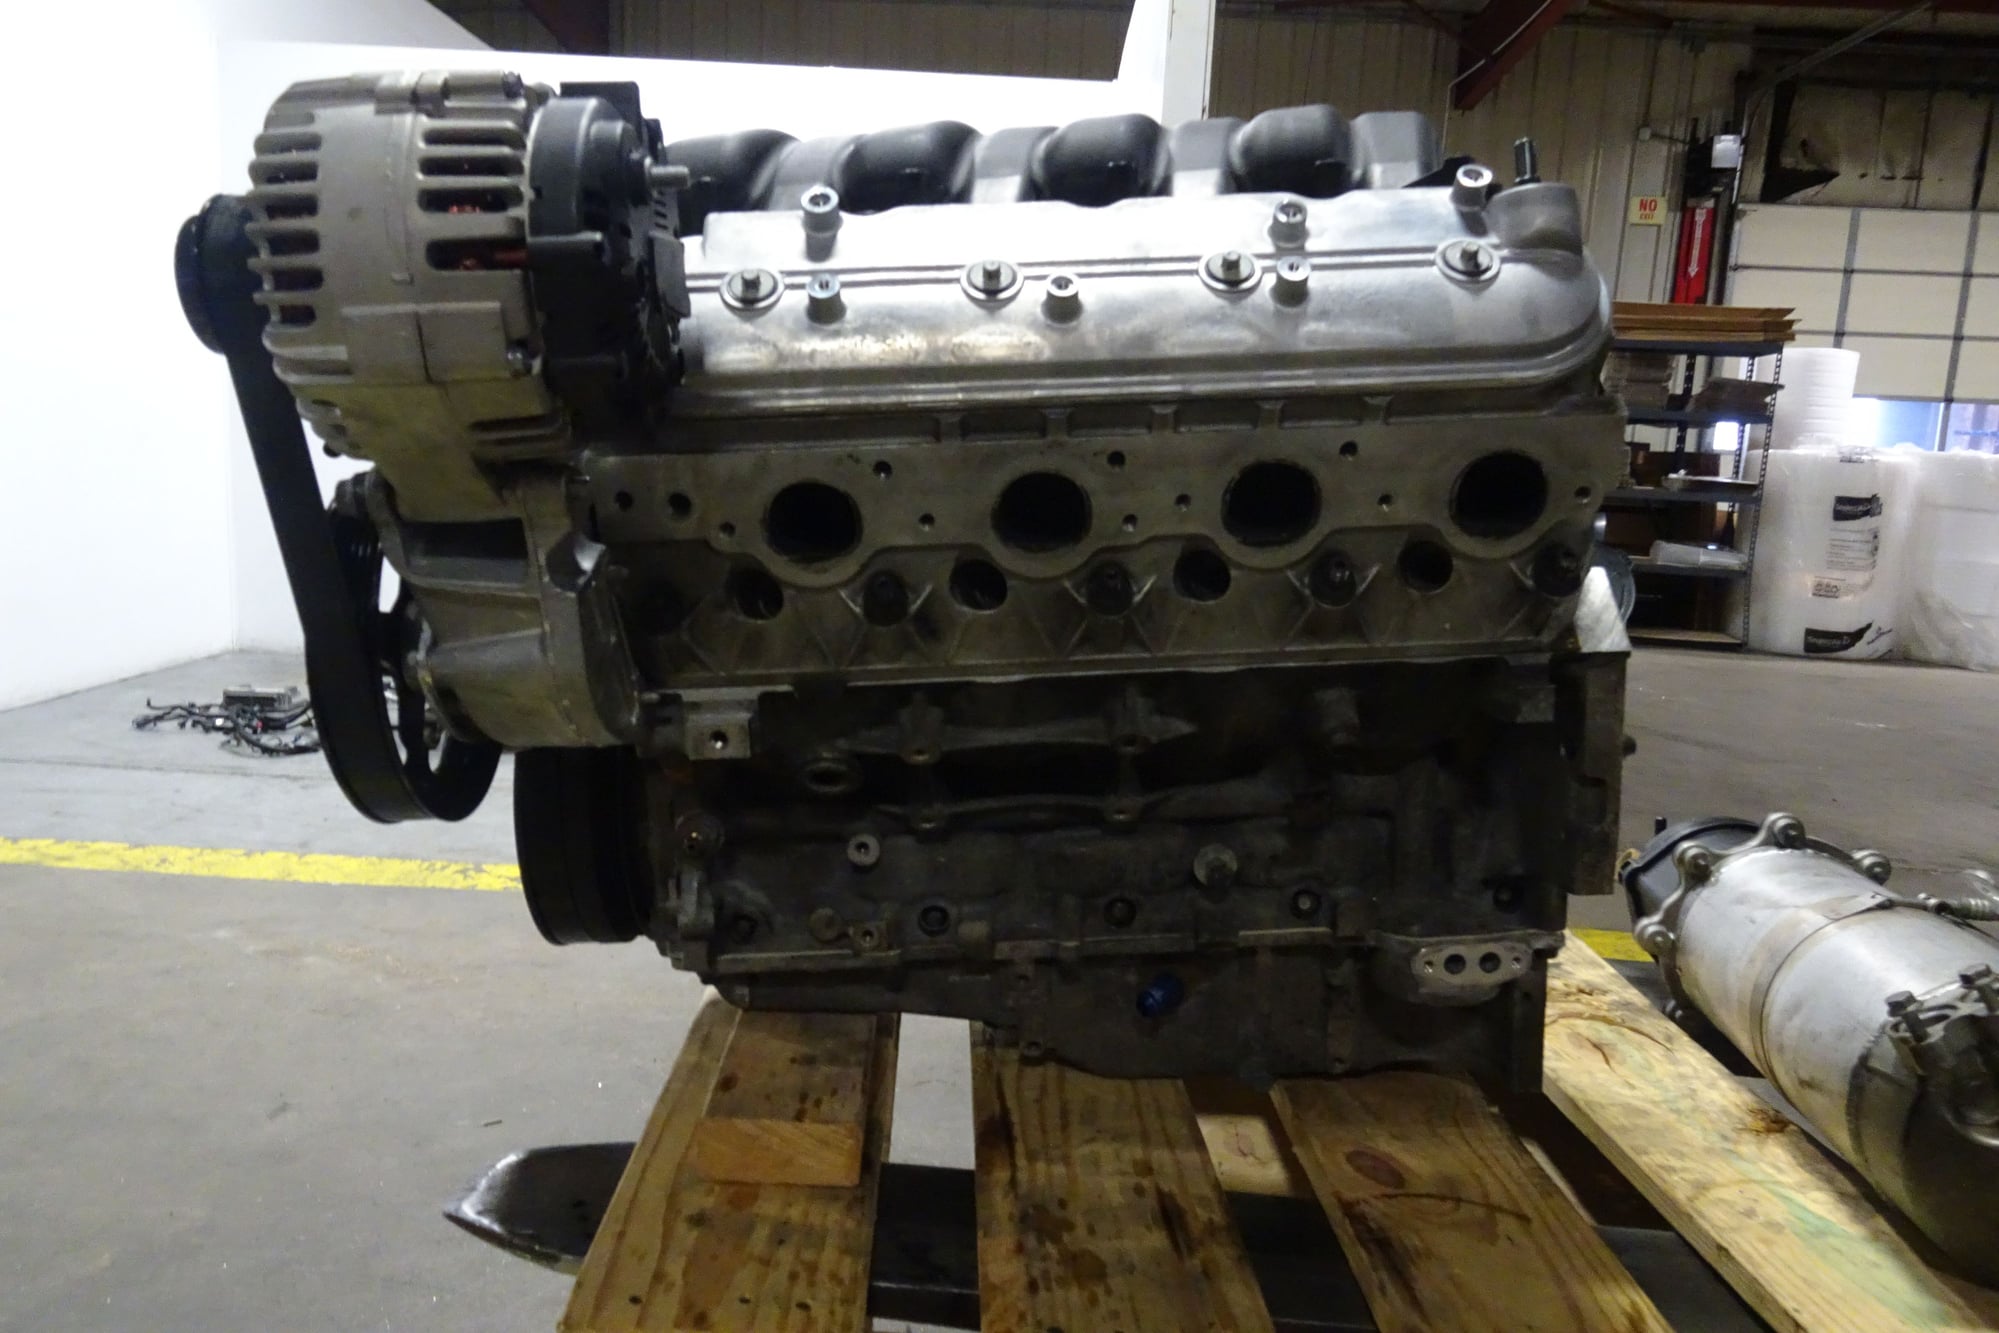  - LS7 447 Stroker Engine W/ Accessories NEW - Crete, NE 68333, United States